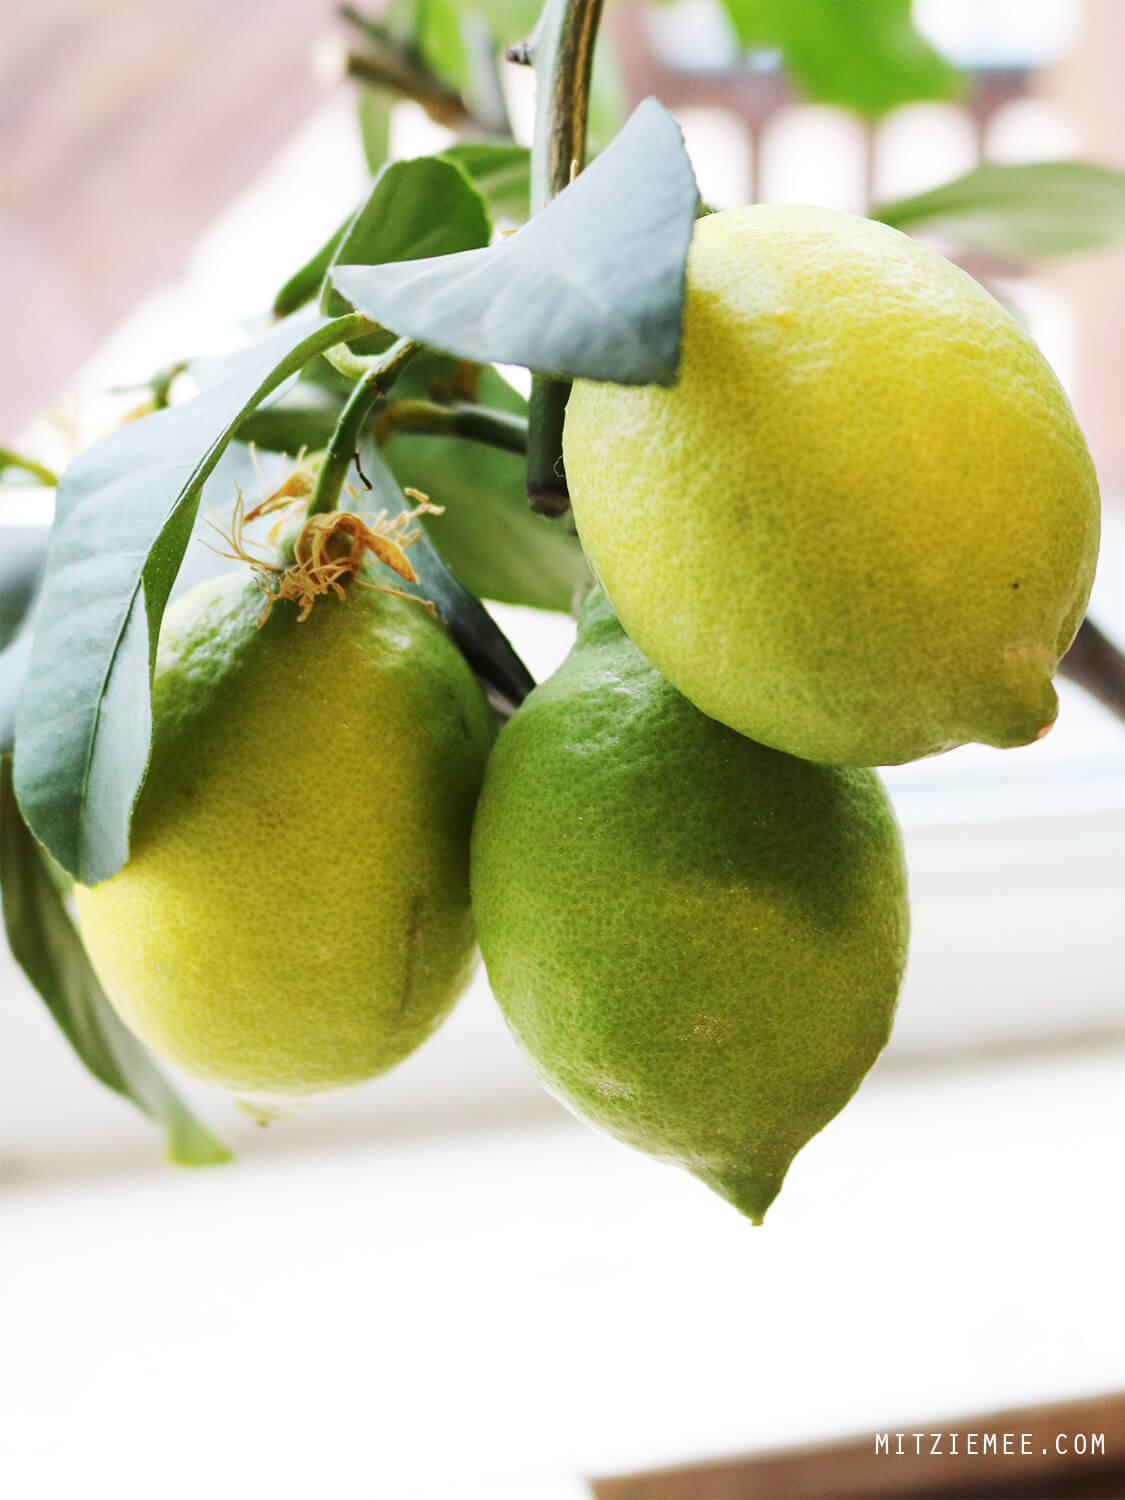 Lemon tree, homegrown lemons